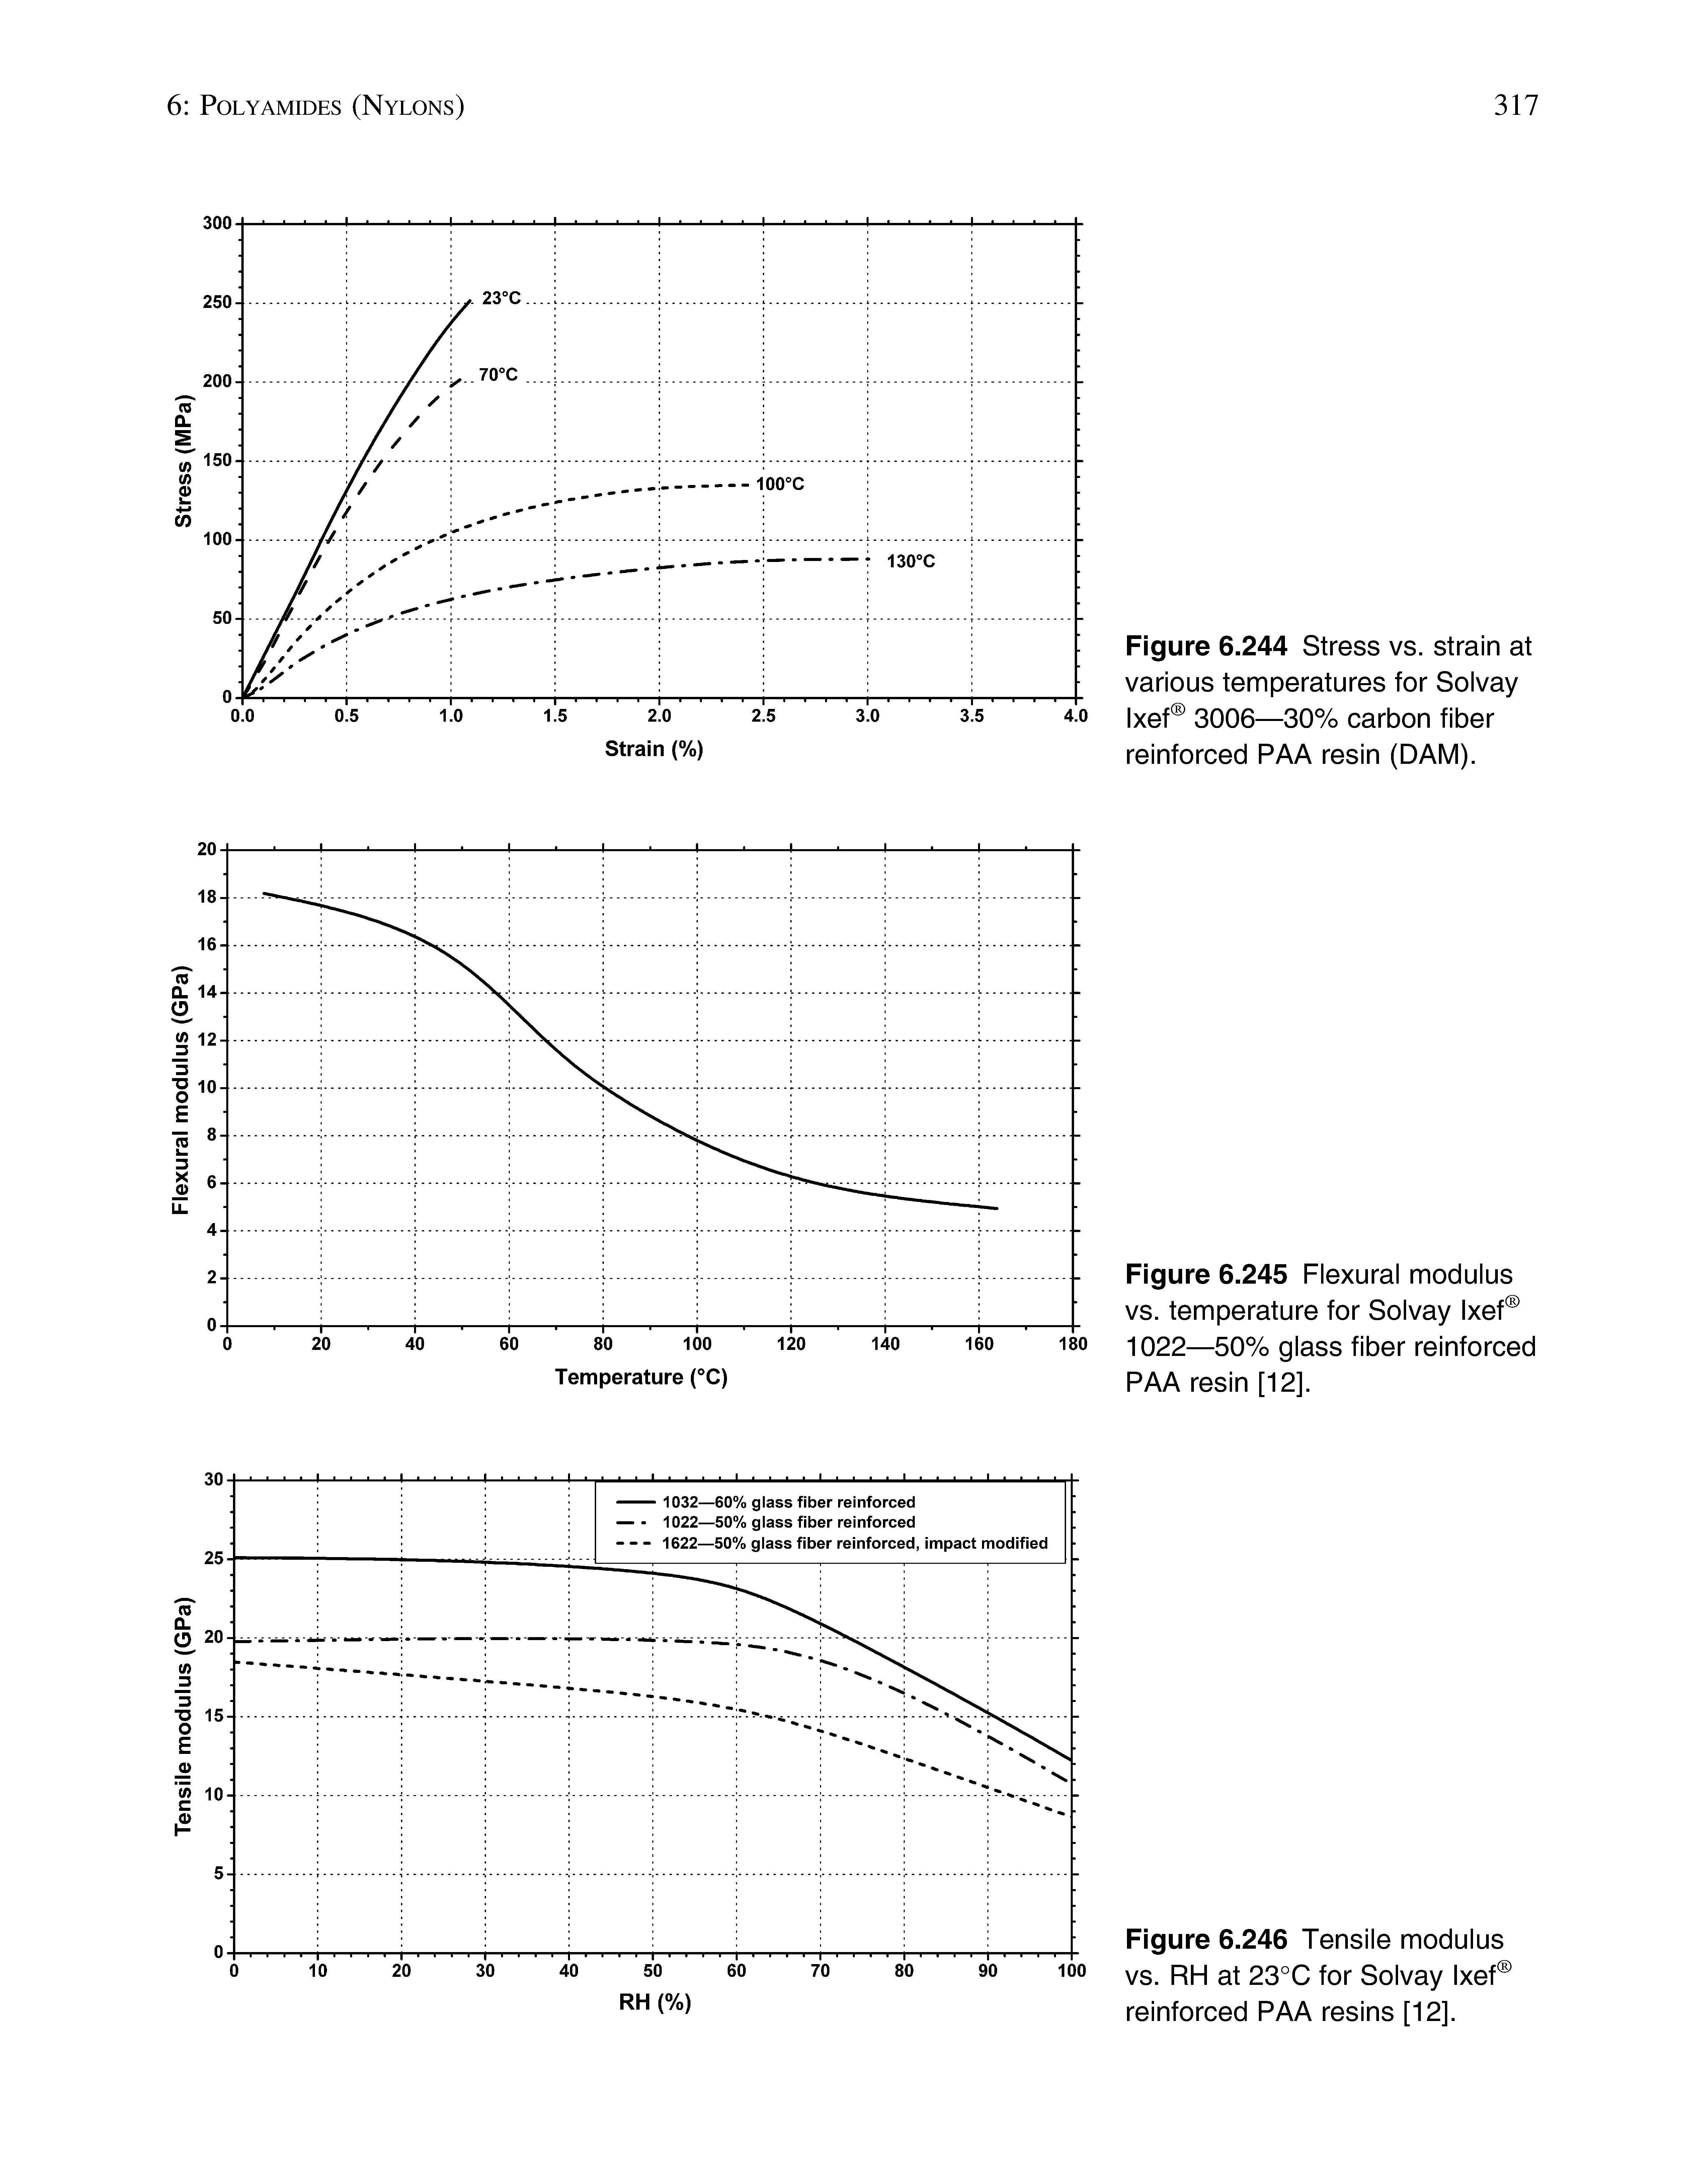 Figure 6.245 Flexural modulus vs. temperature for Solvay Ixef 1022—50% glass fiber reinforced PAA resin [12].